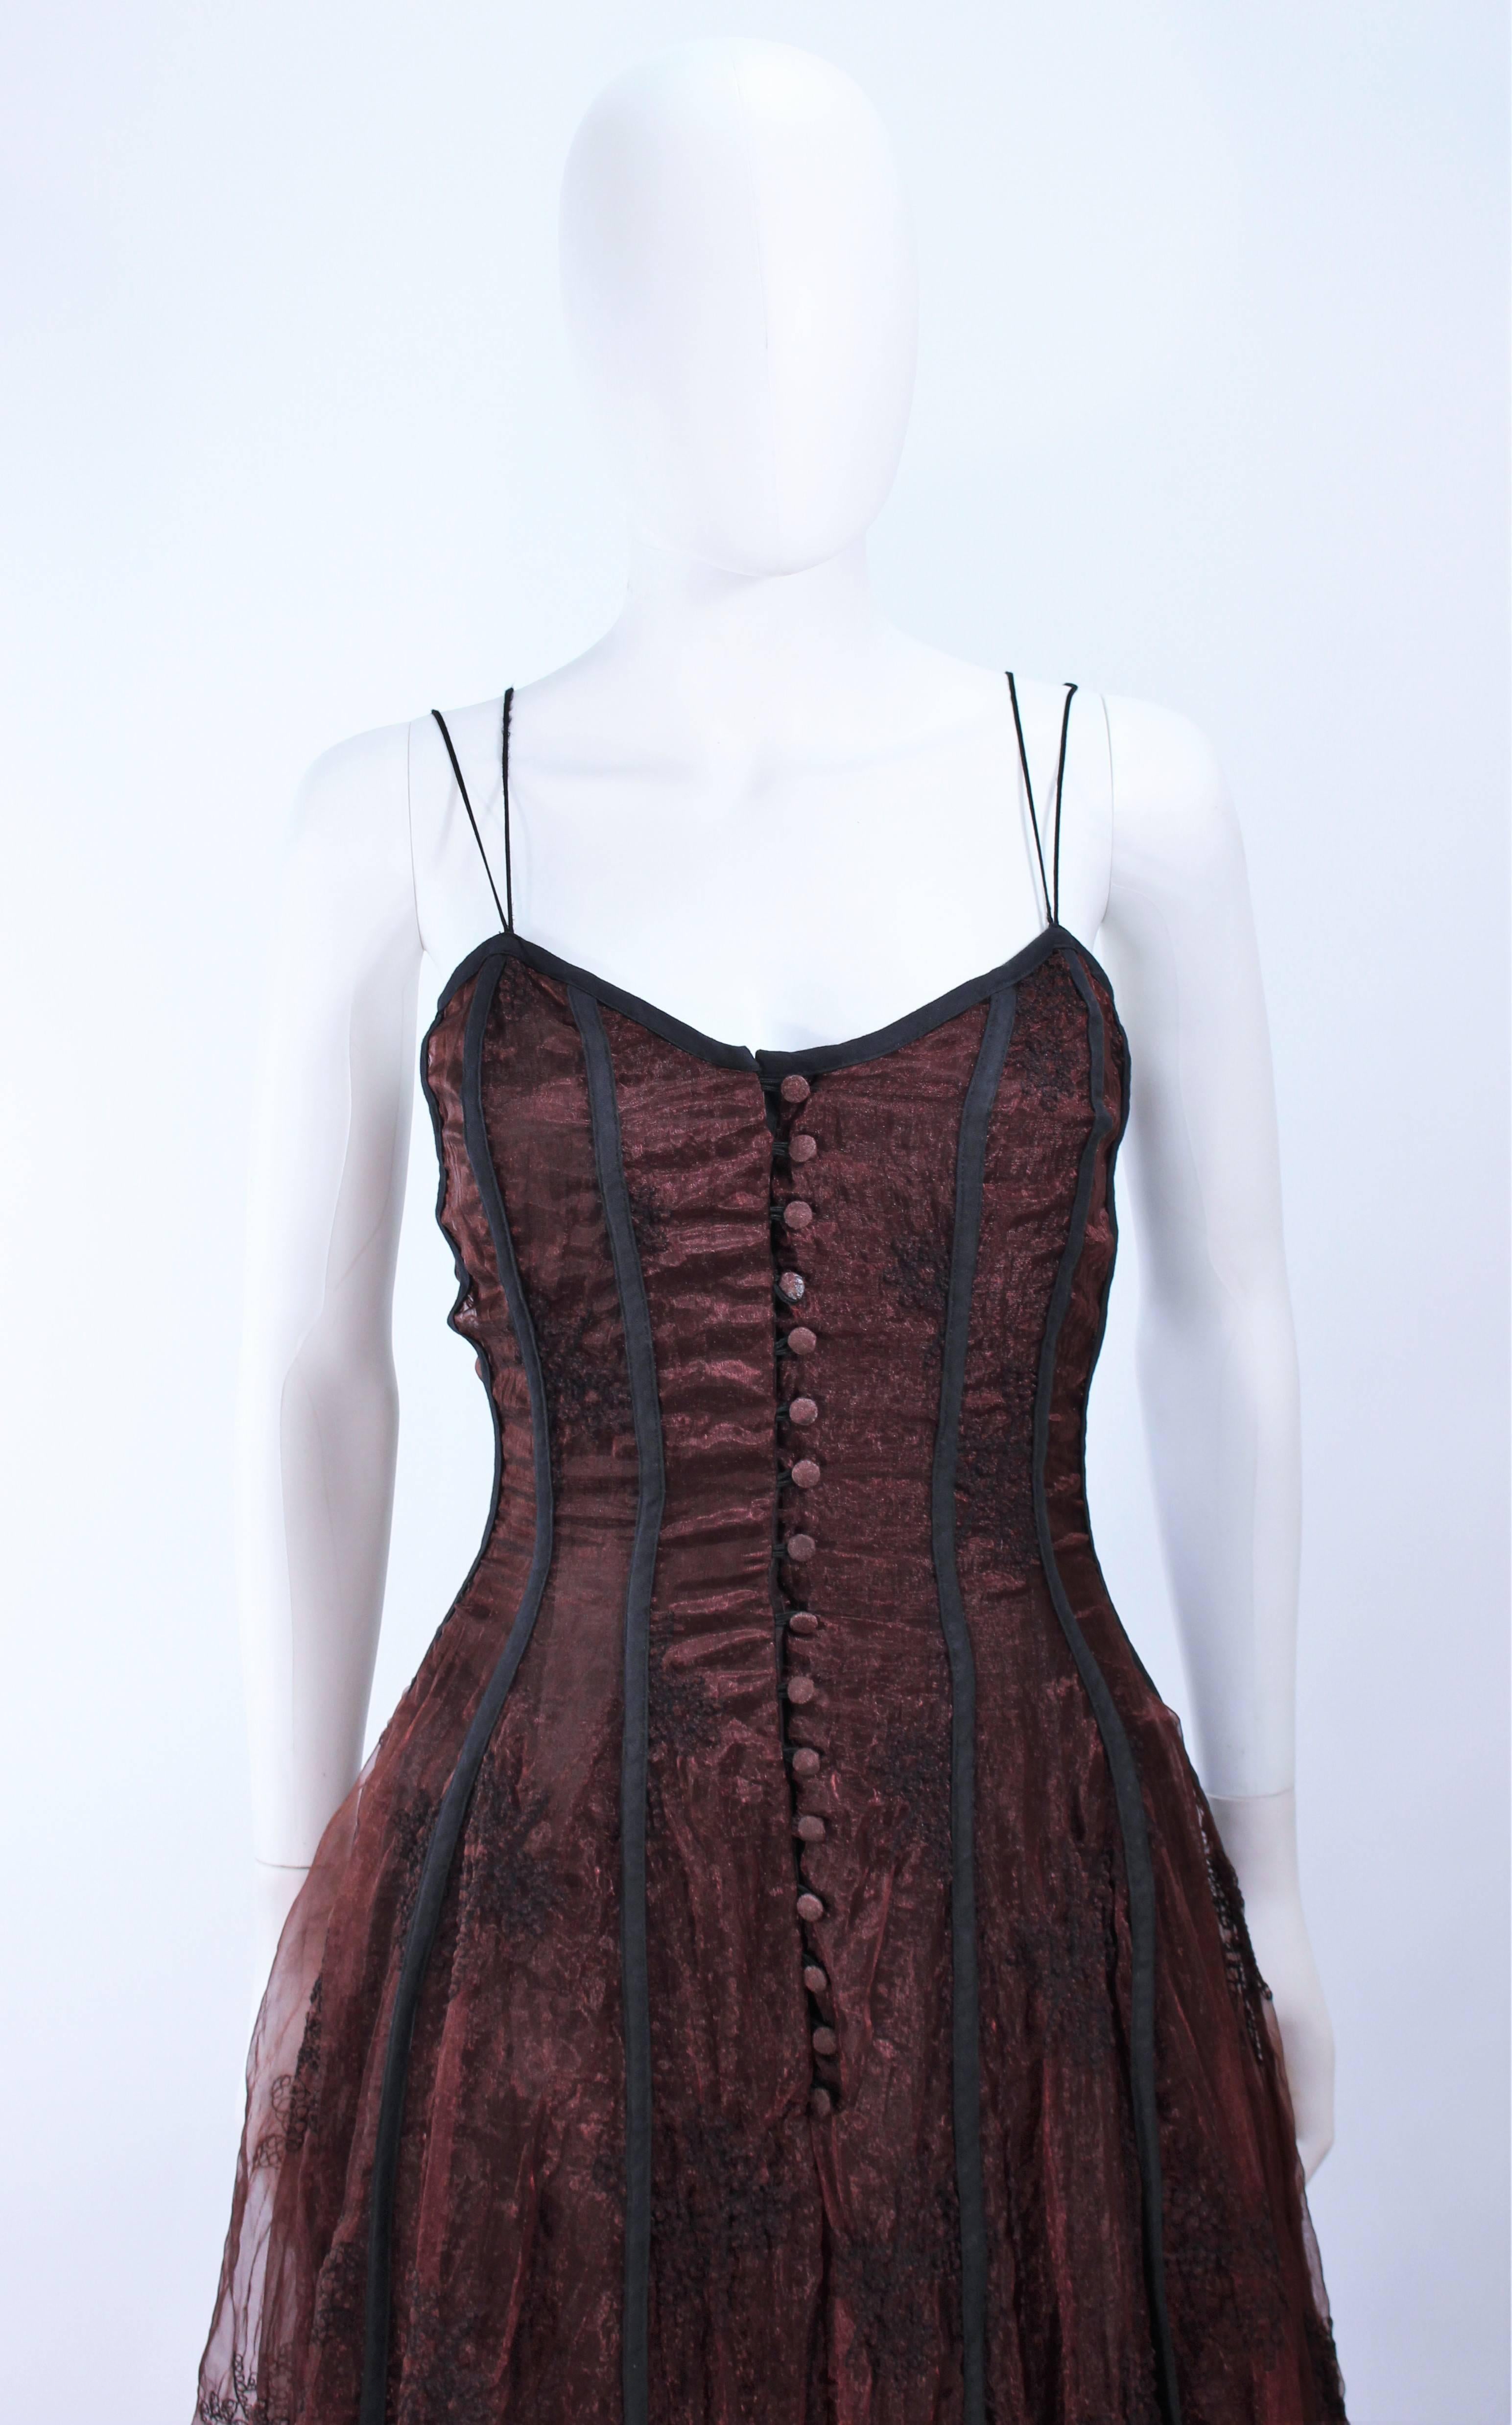 Noir KAAT TILLY Robe marron en dentelle froissée avec corset en dentelle Taille 36 en vente